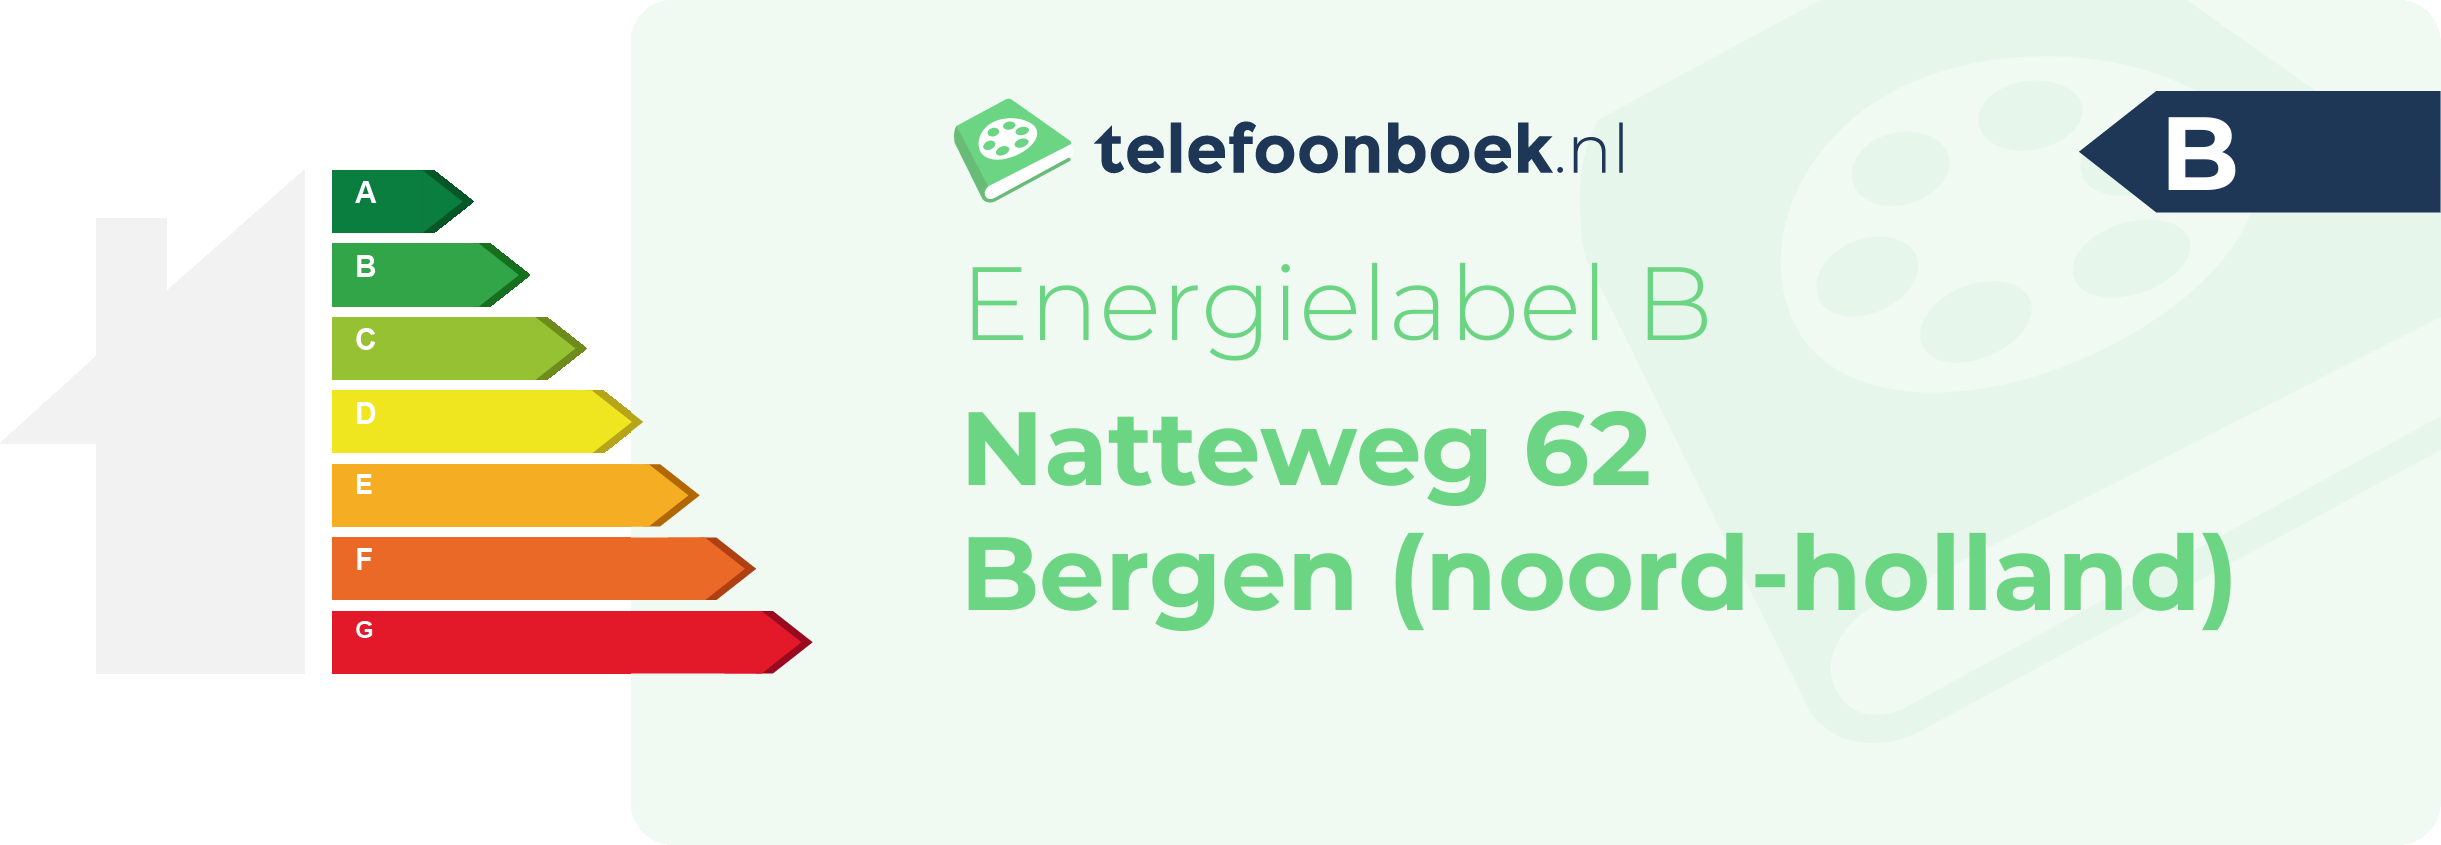 Energielabel Natteweg 62 Bergen (Noord-Holland)